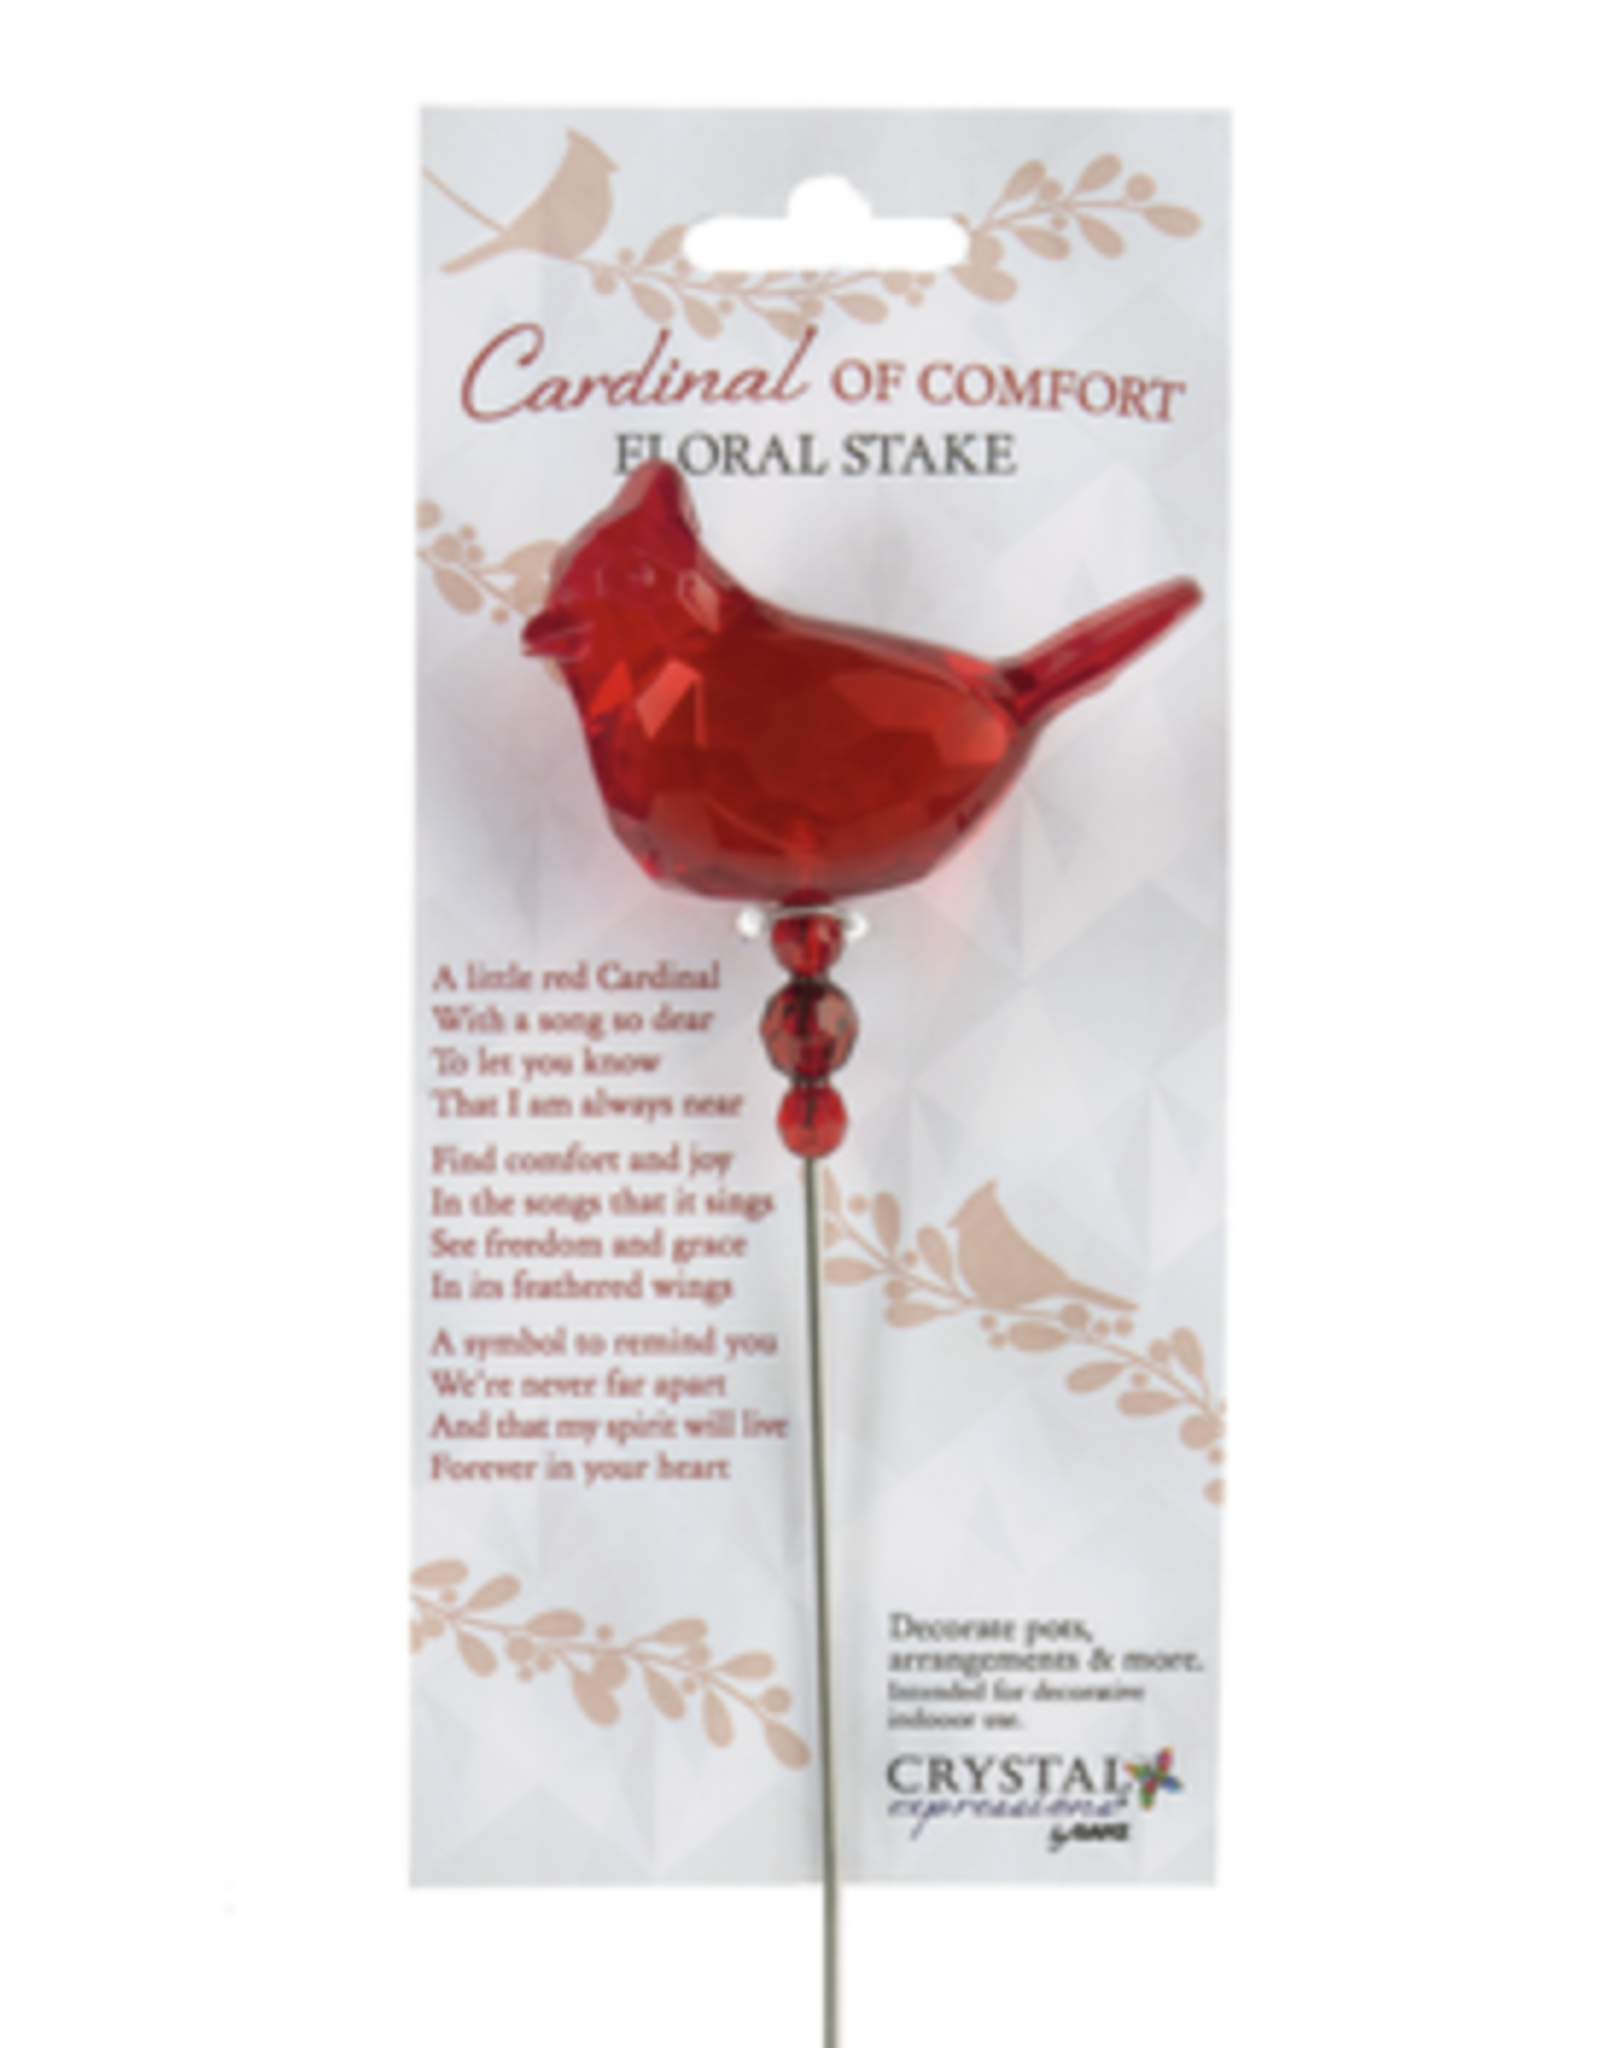 Ganz Cardinal of Comfort Floral Stake